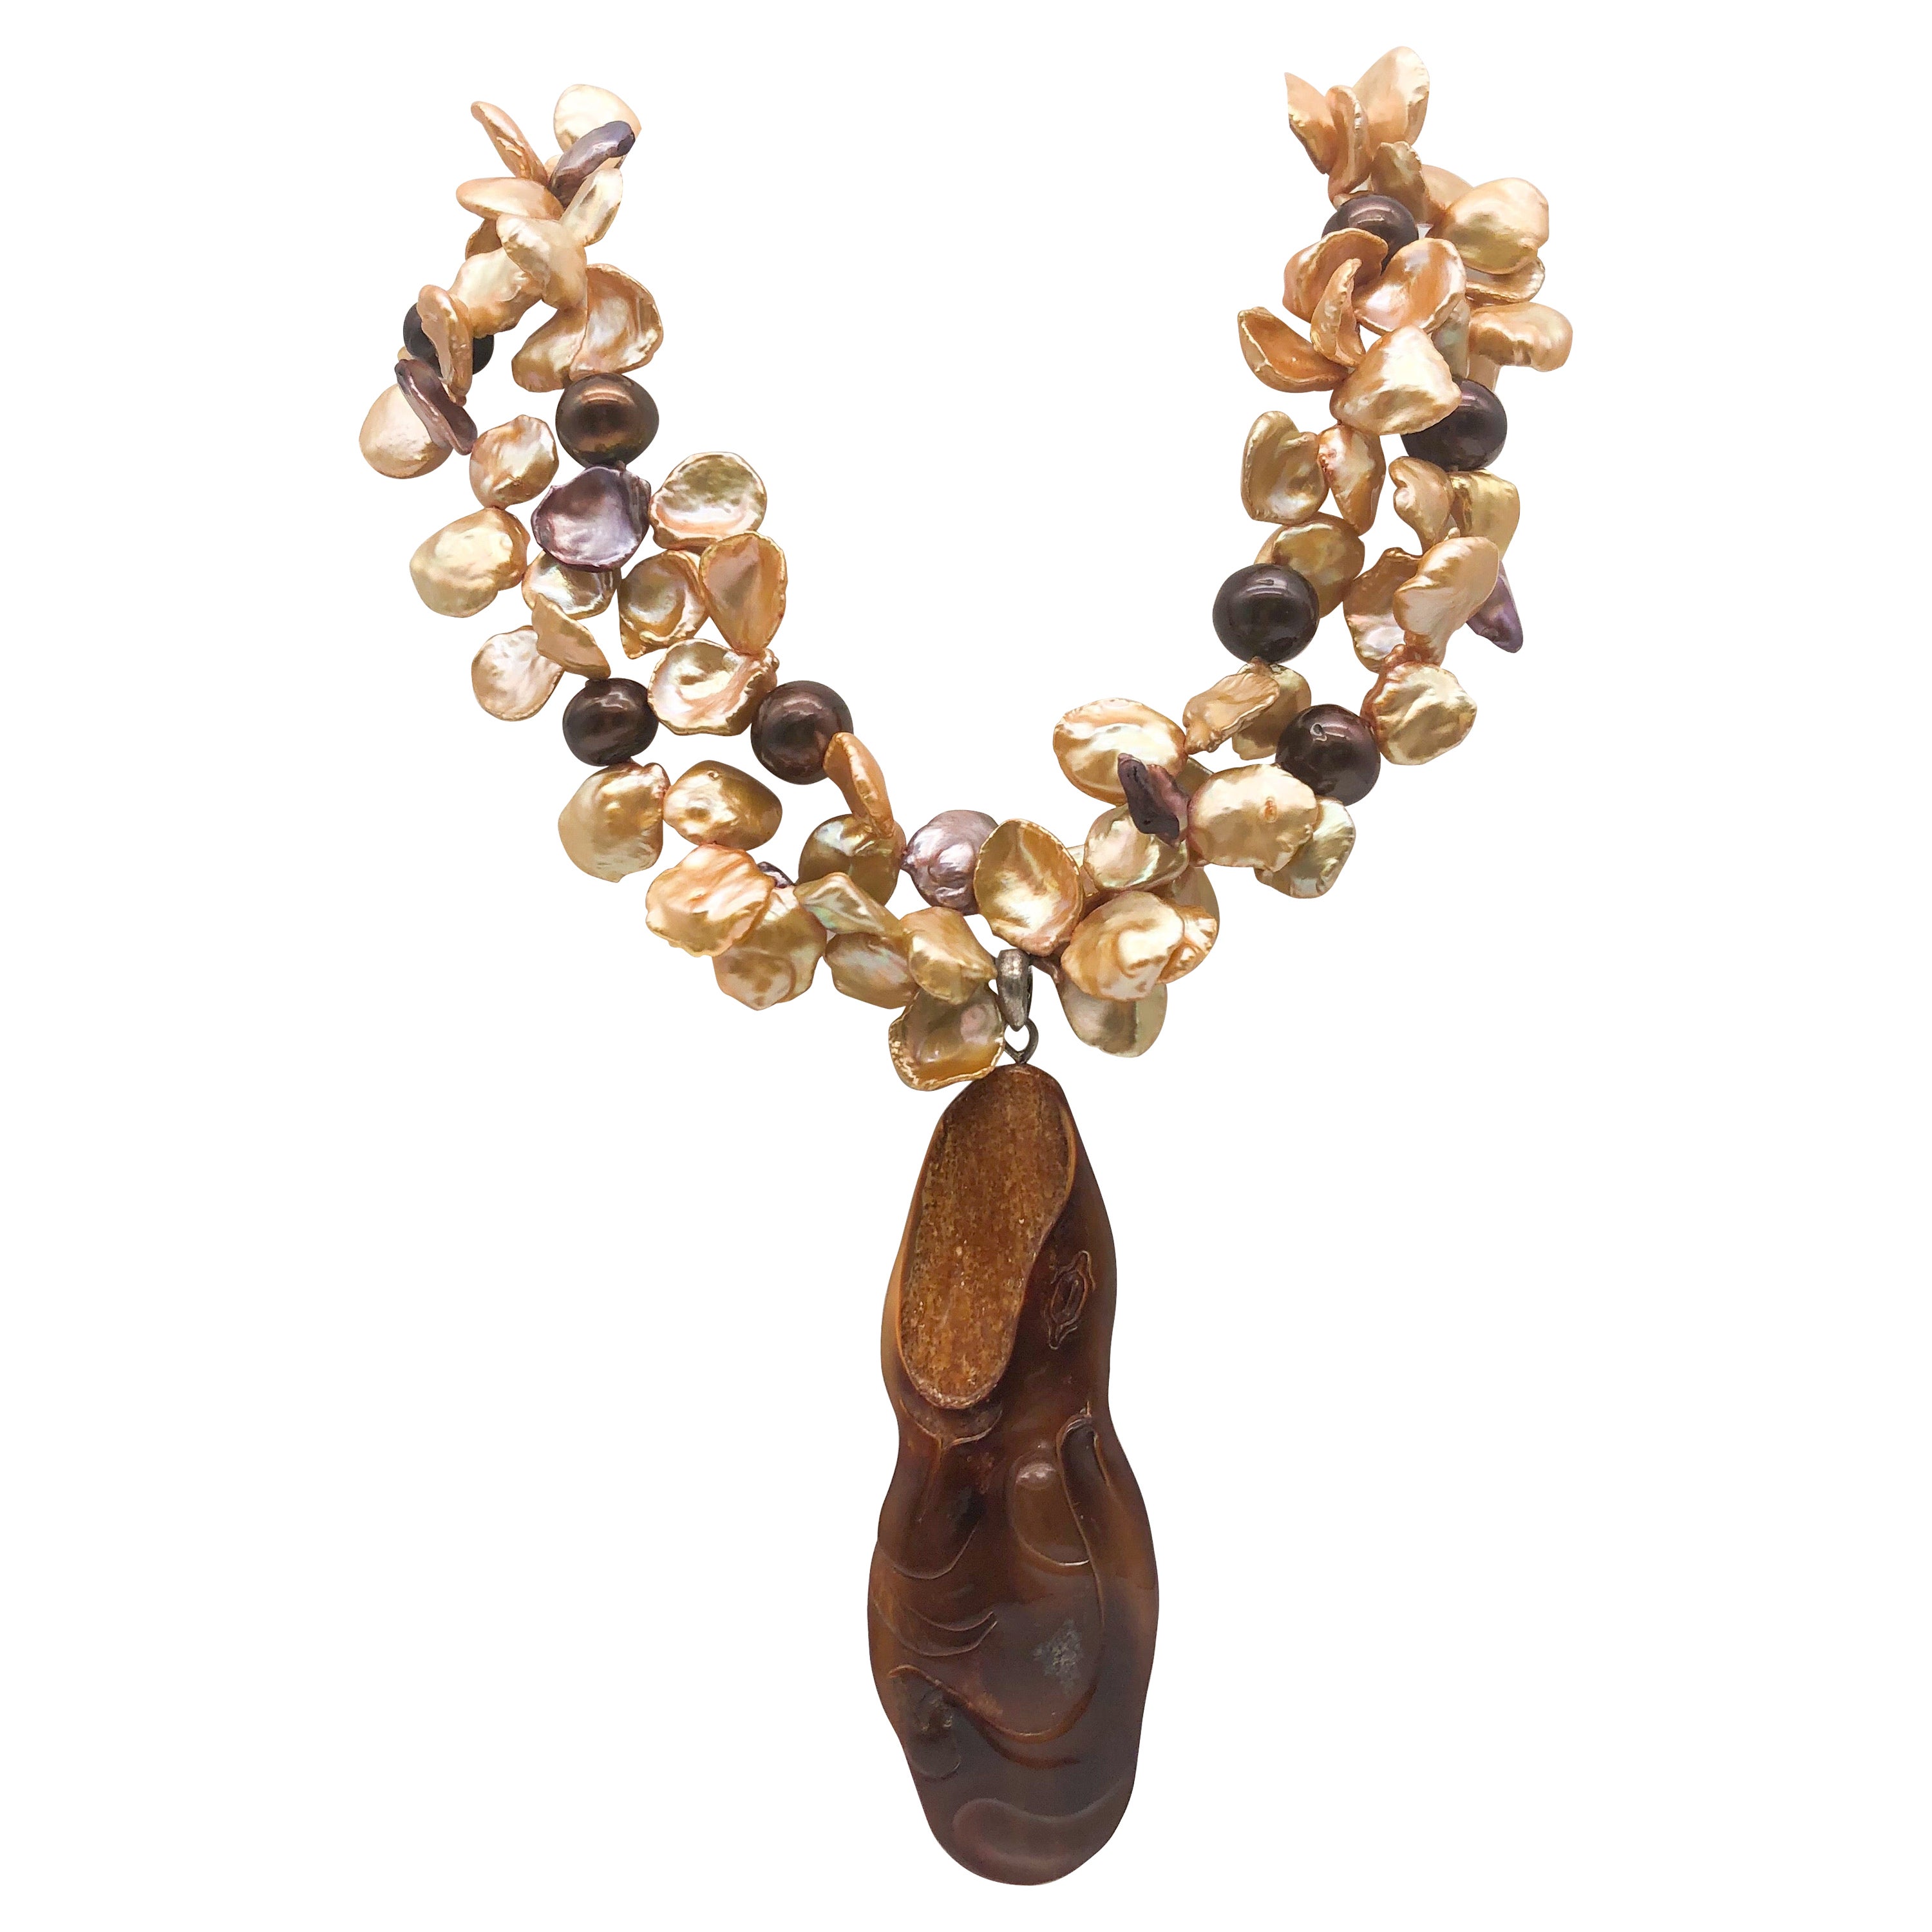 A.Jeschel Fossilized Scrimshaw Walrus pendant necklace